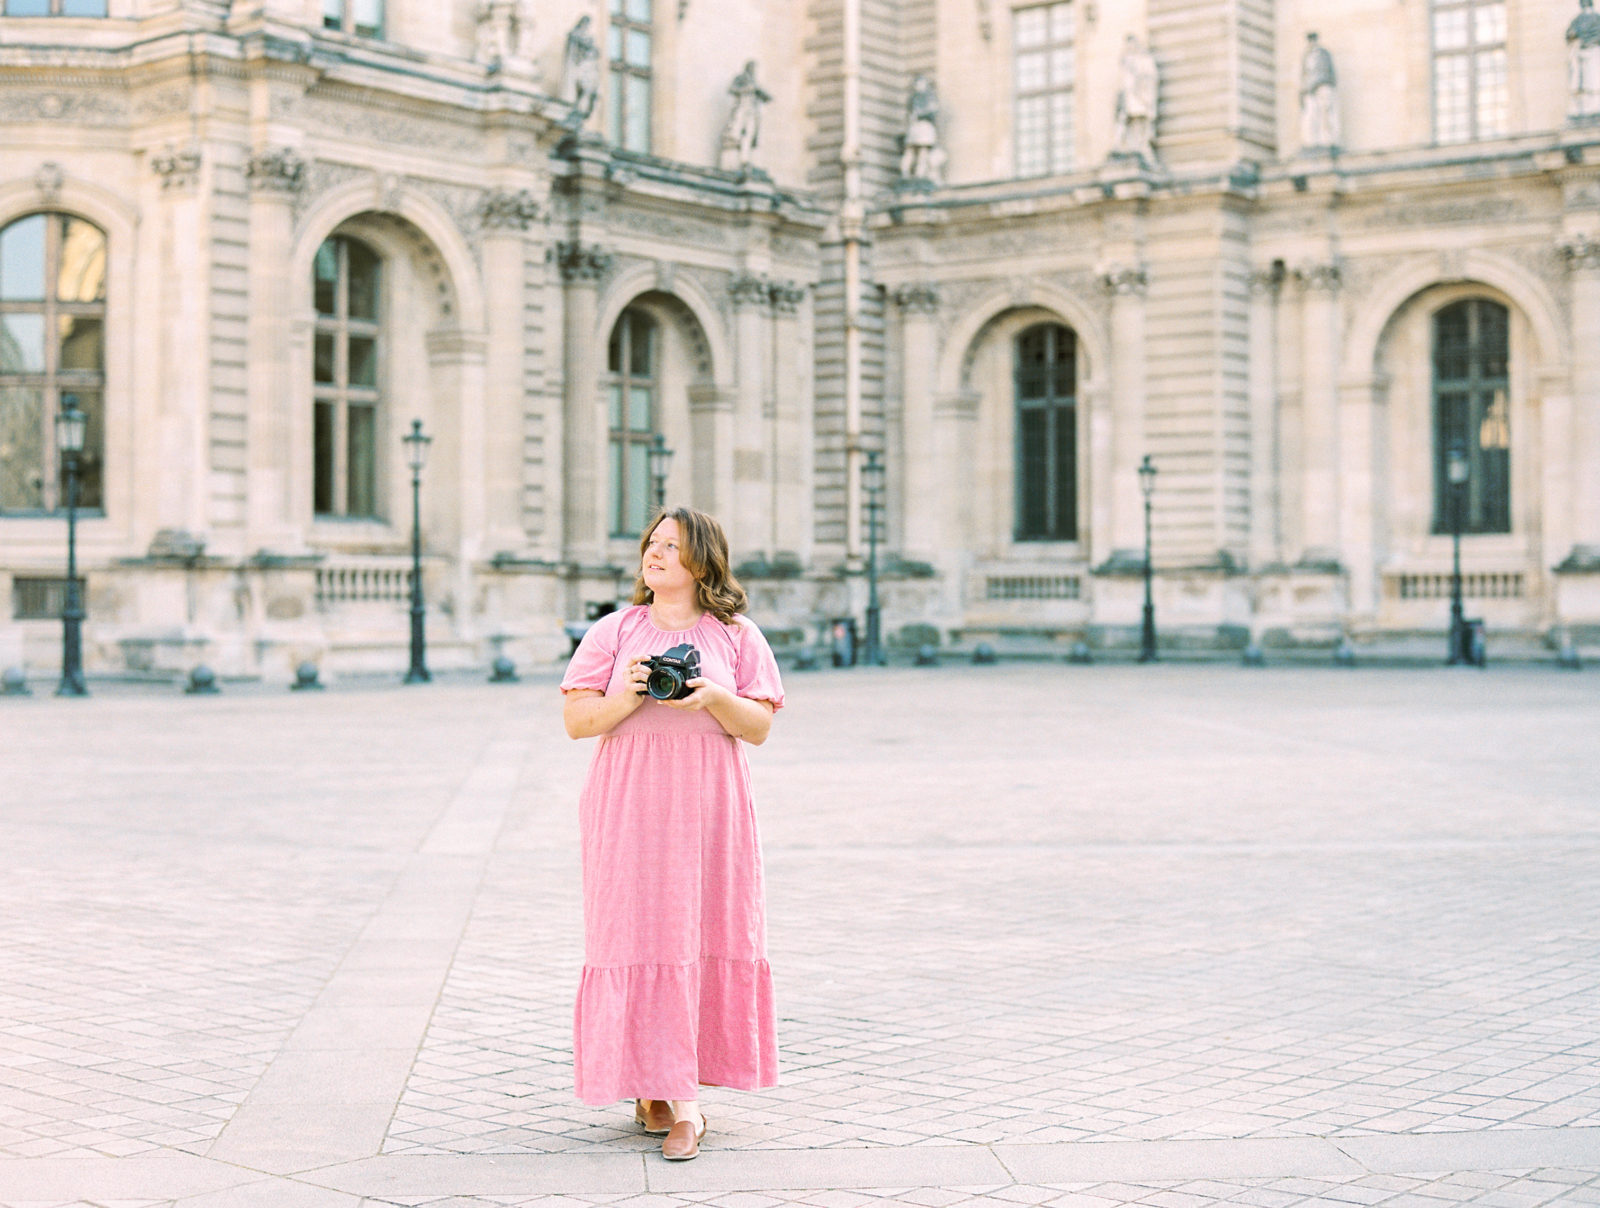 Woman in pink dress in Louvre courtyard